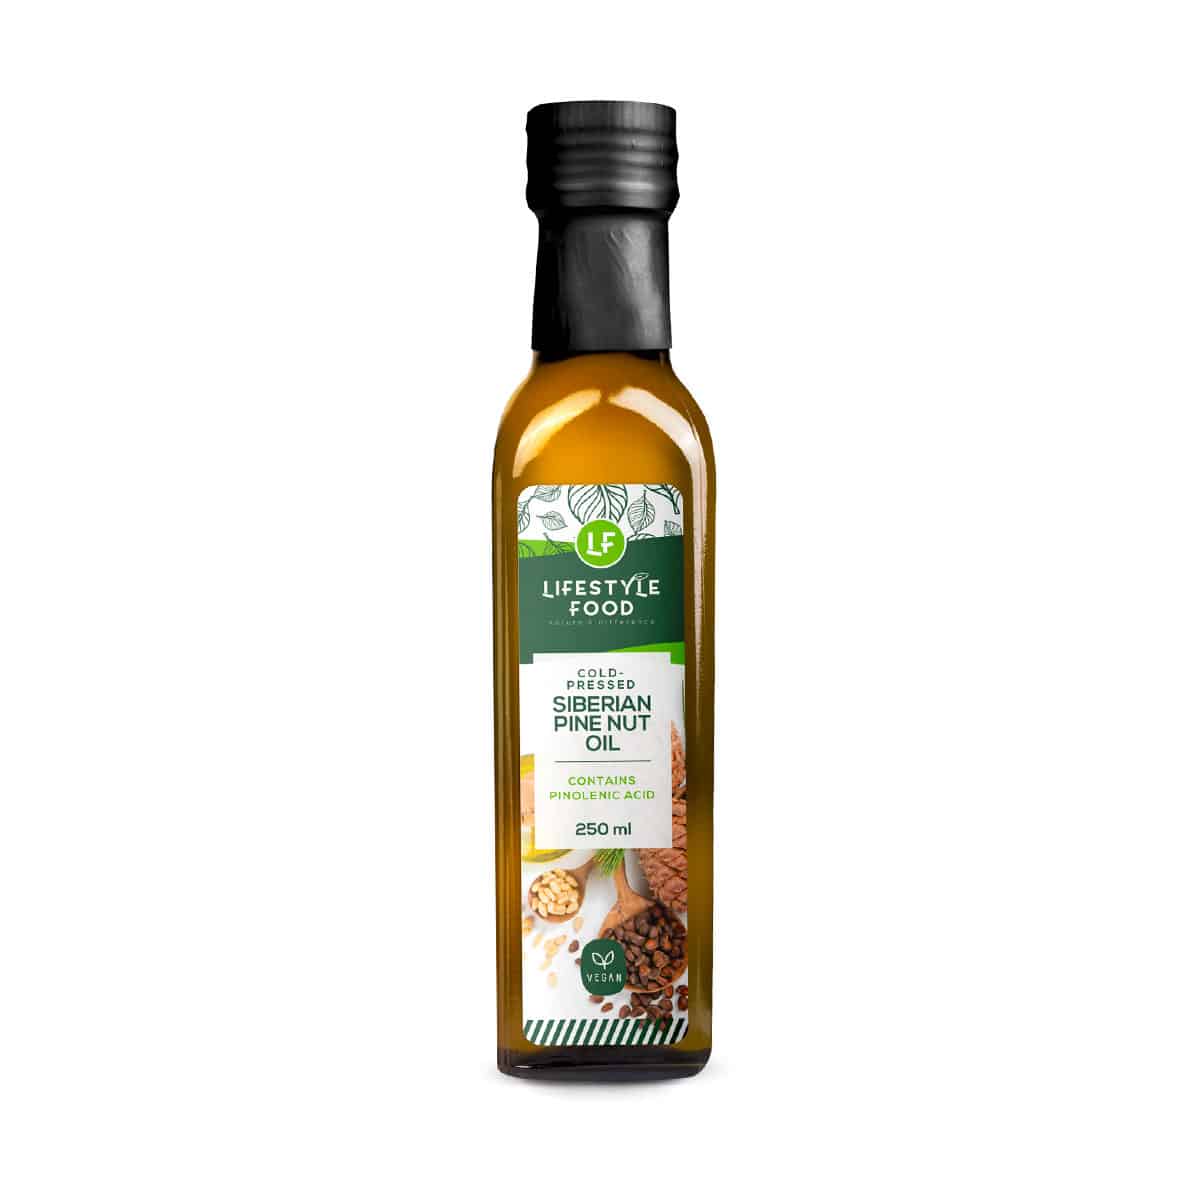 Lifestyle Food Cold Pressed Siberian Pine Nut Oil - 250ml